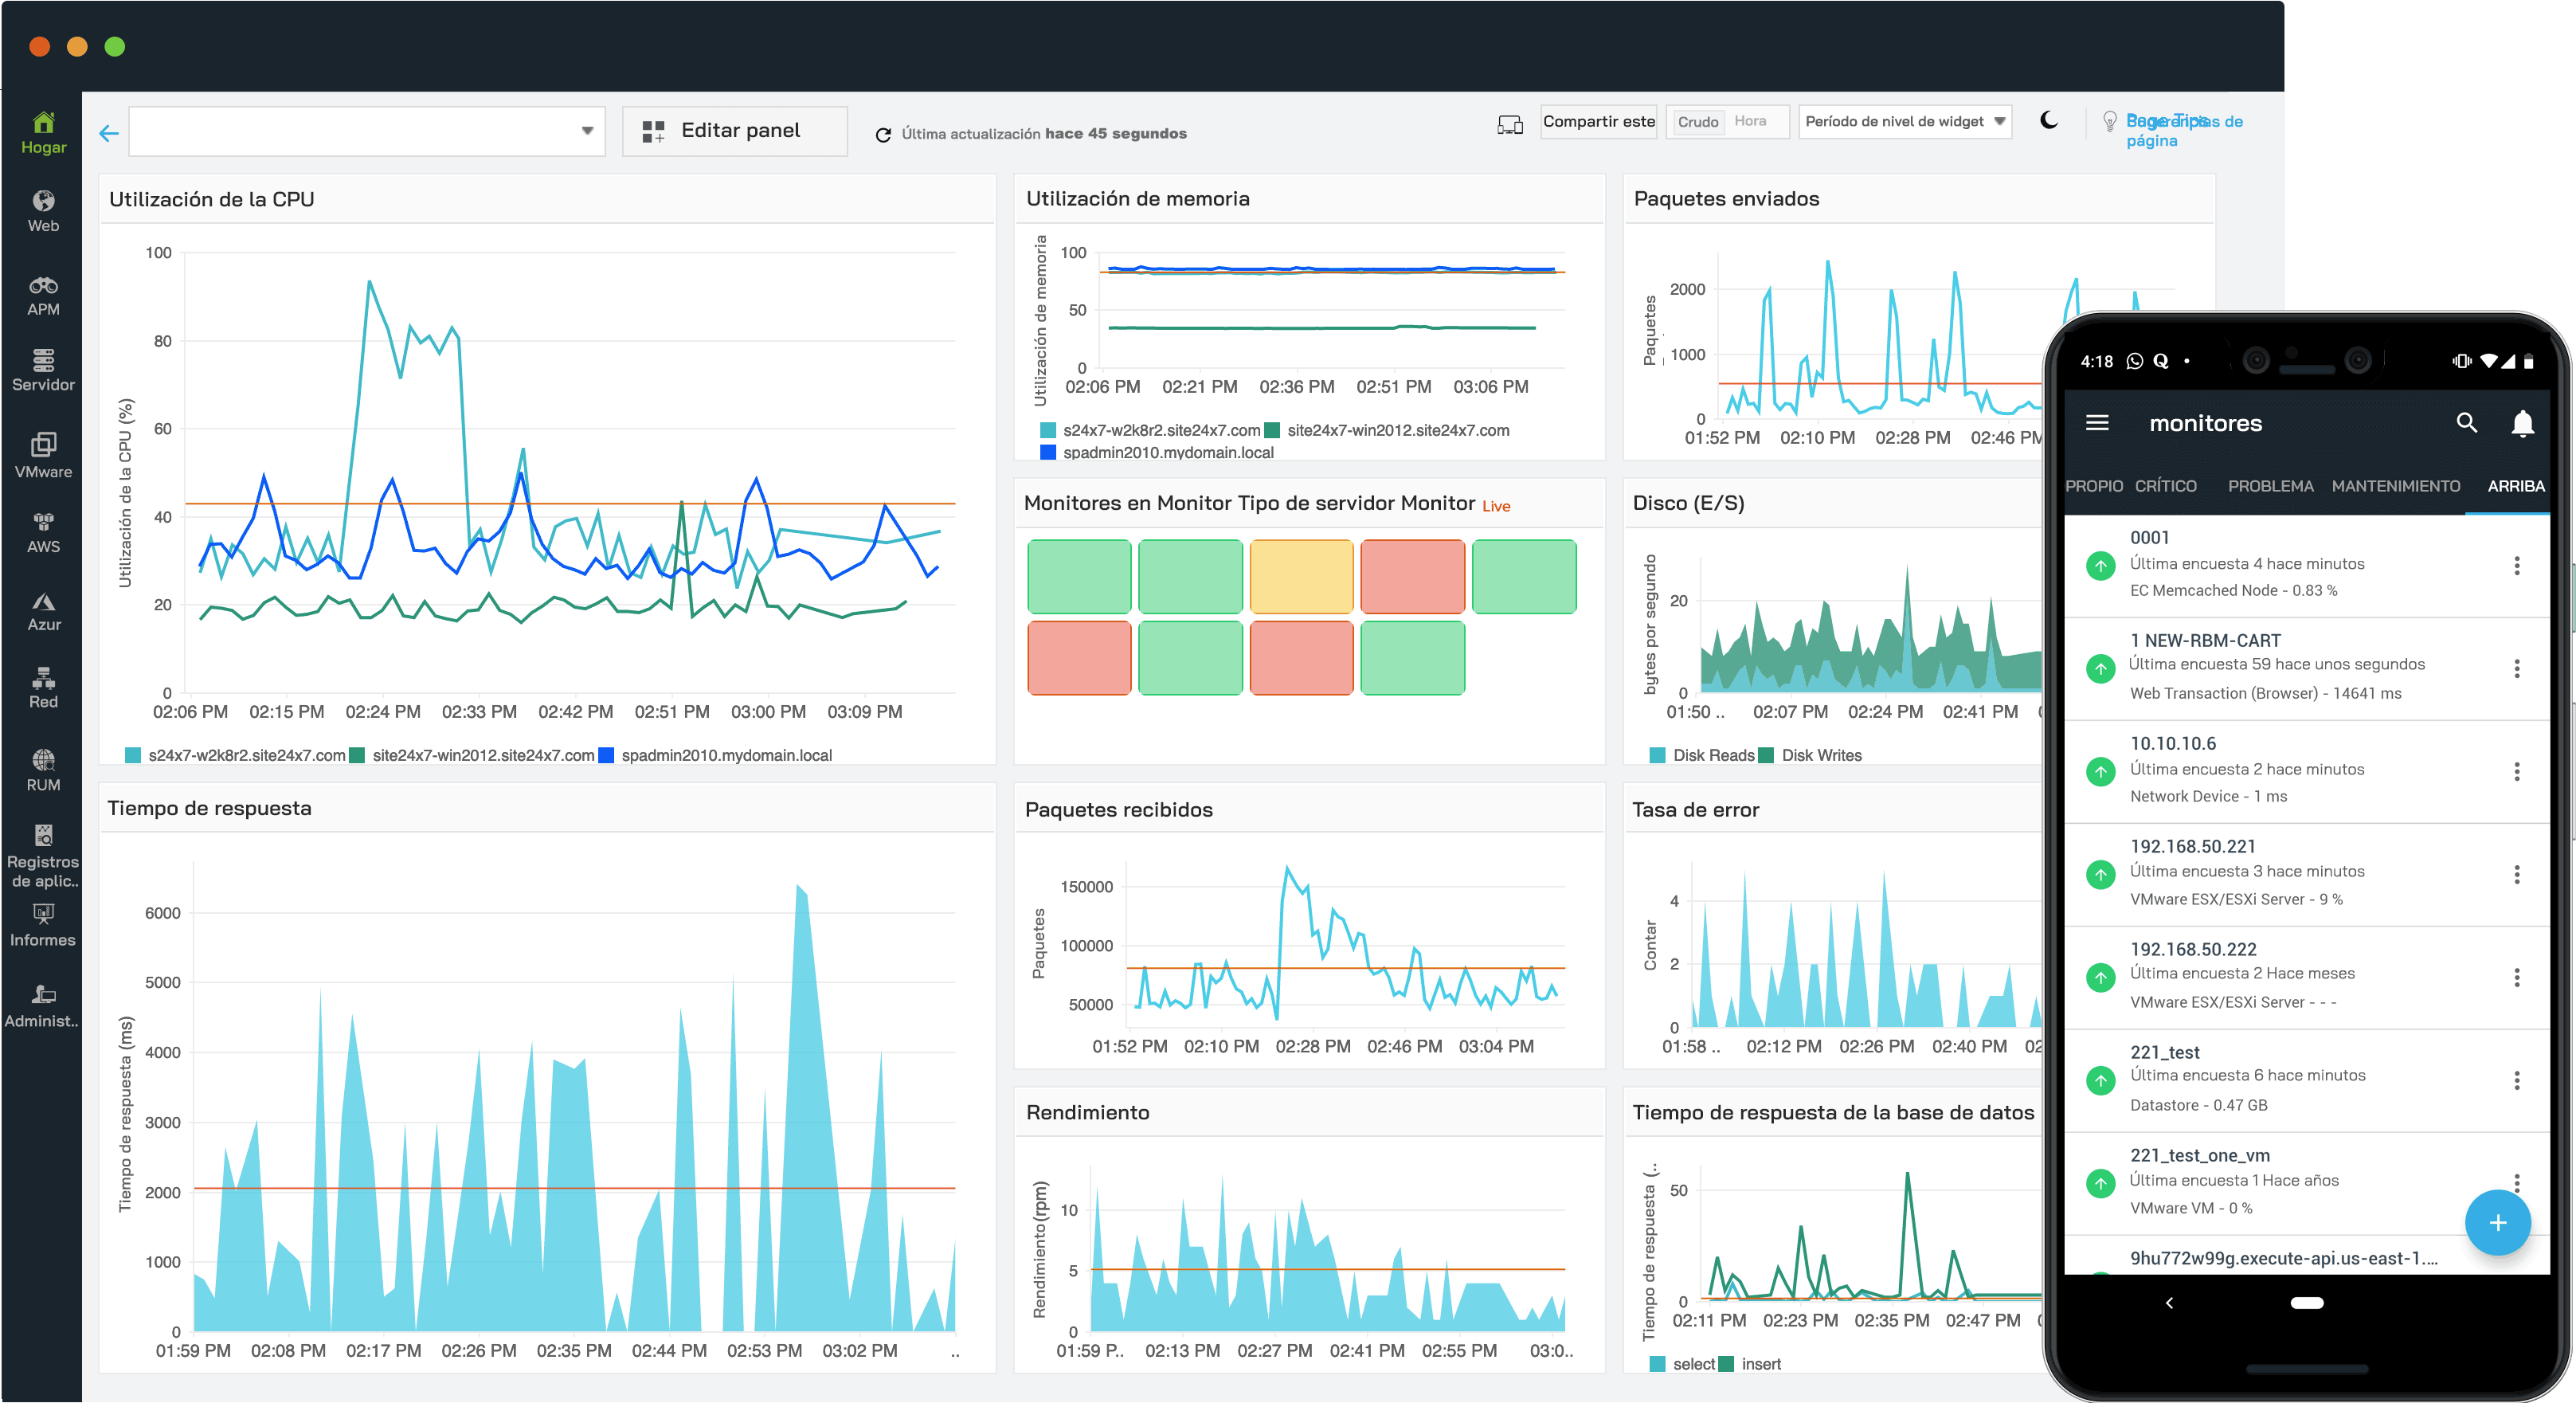 A custom dashboard displaying multiple metrics as time-series graphs